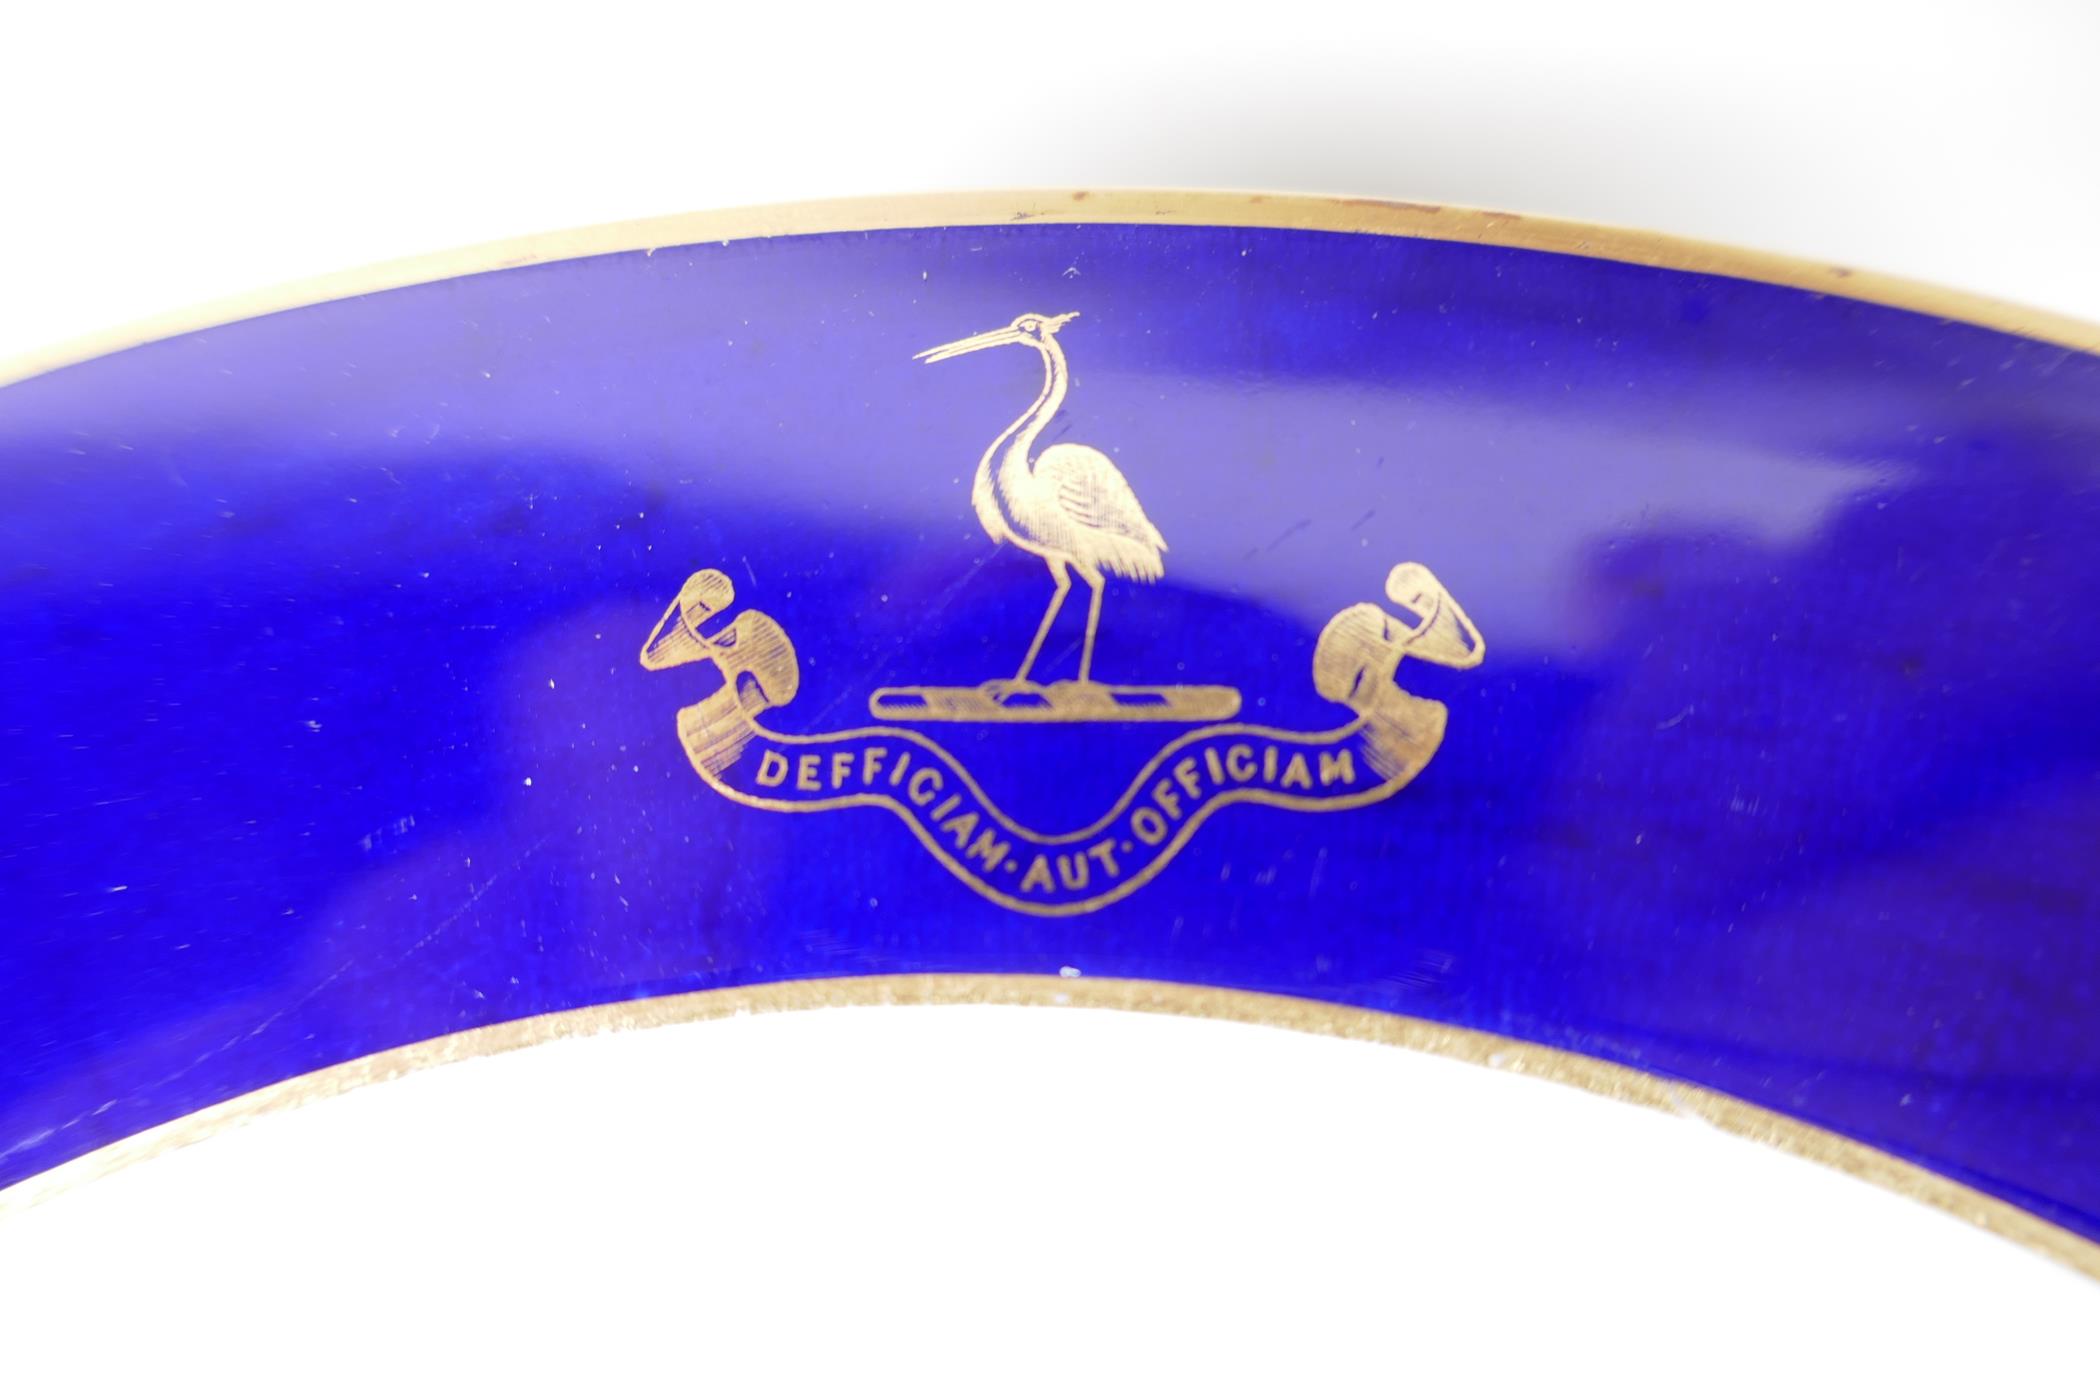 Vintage Royal Worcester cobalt blue and gilt decorated tableware, embellished with a heron crest and - Image 3 of 4